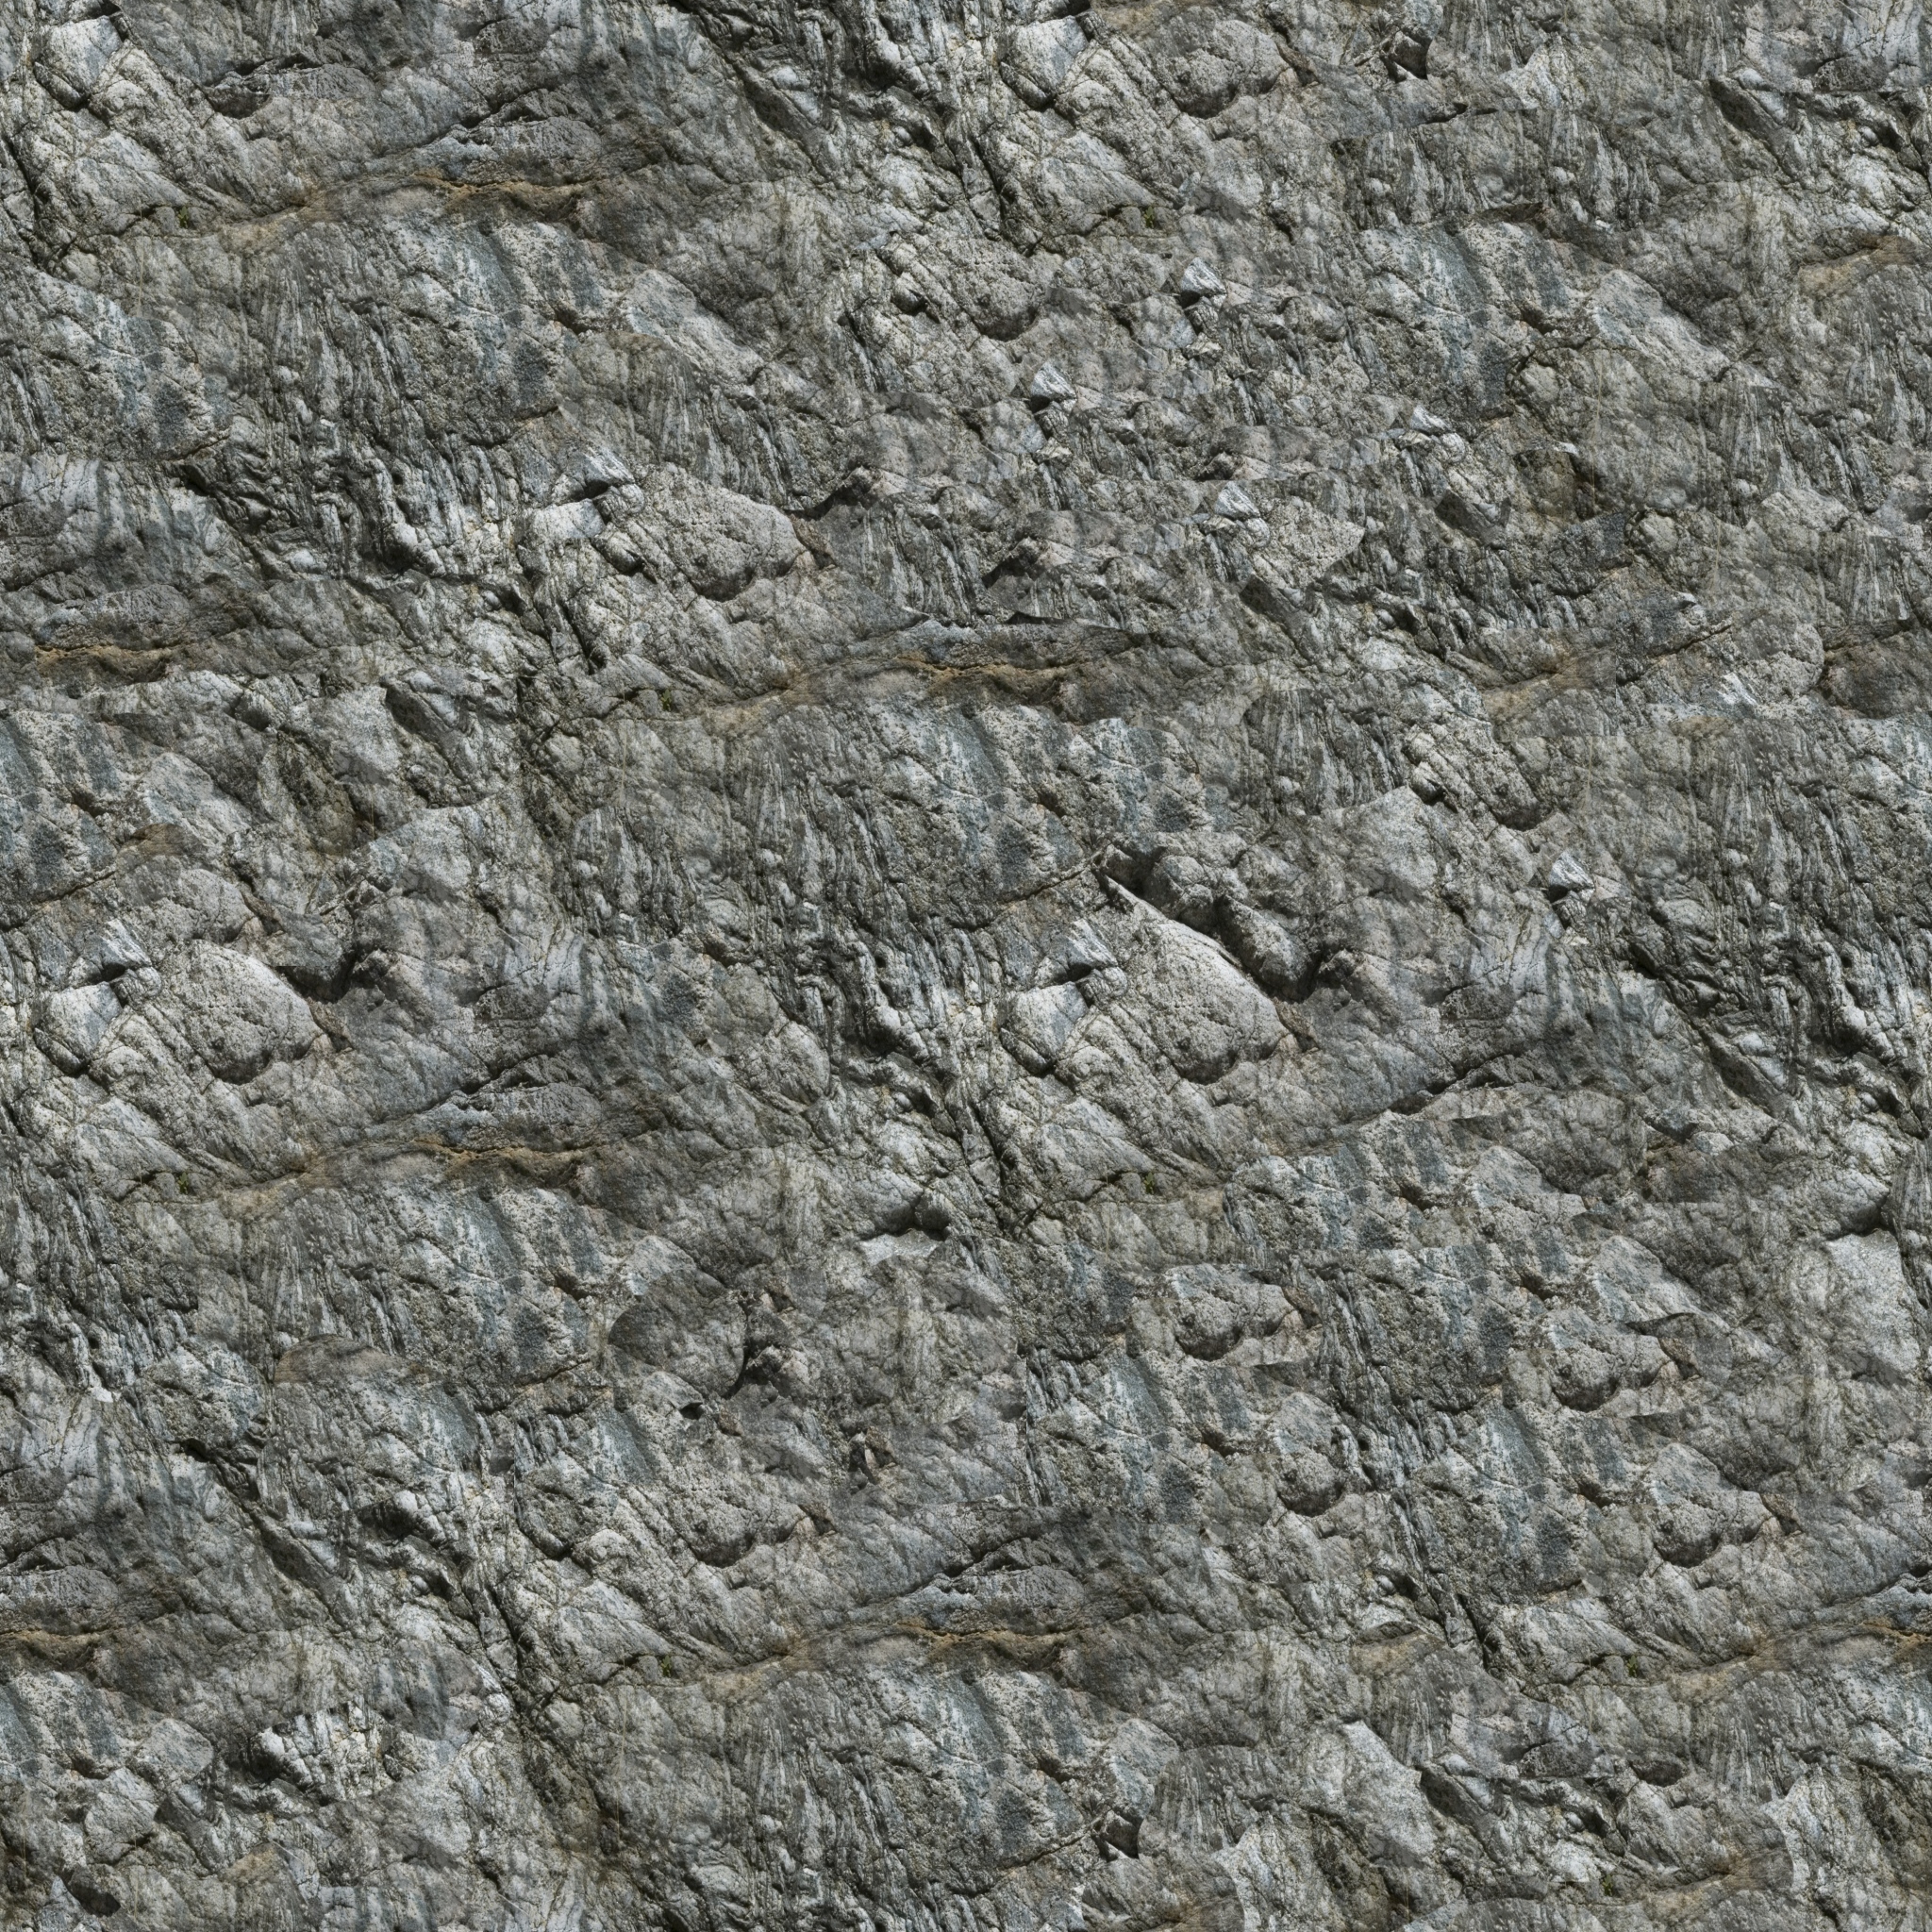 Rock Texture by Wildjaeger on DeviantArt